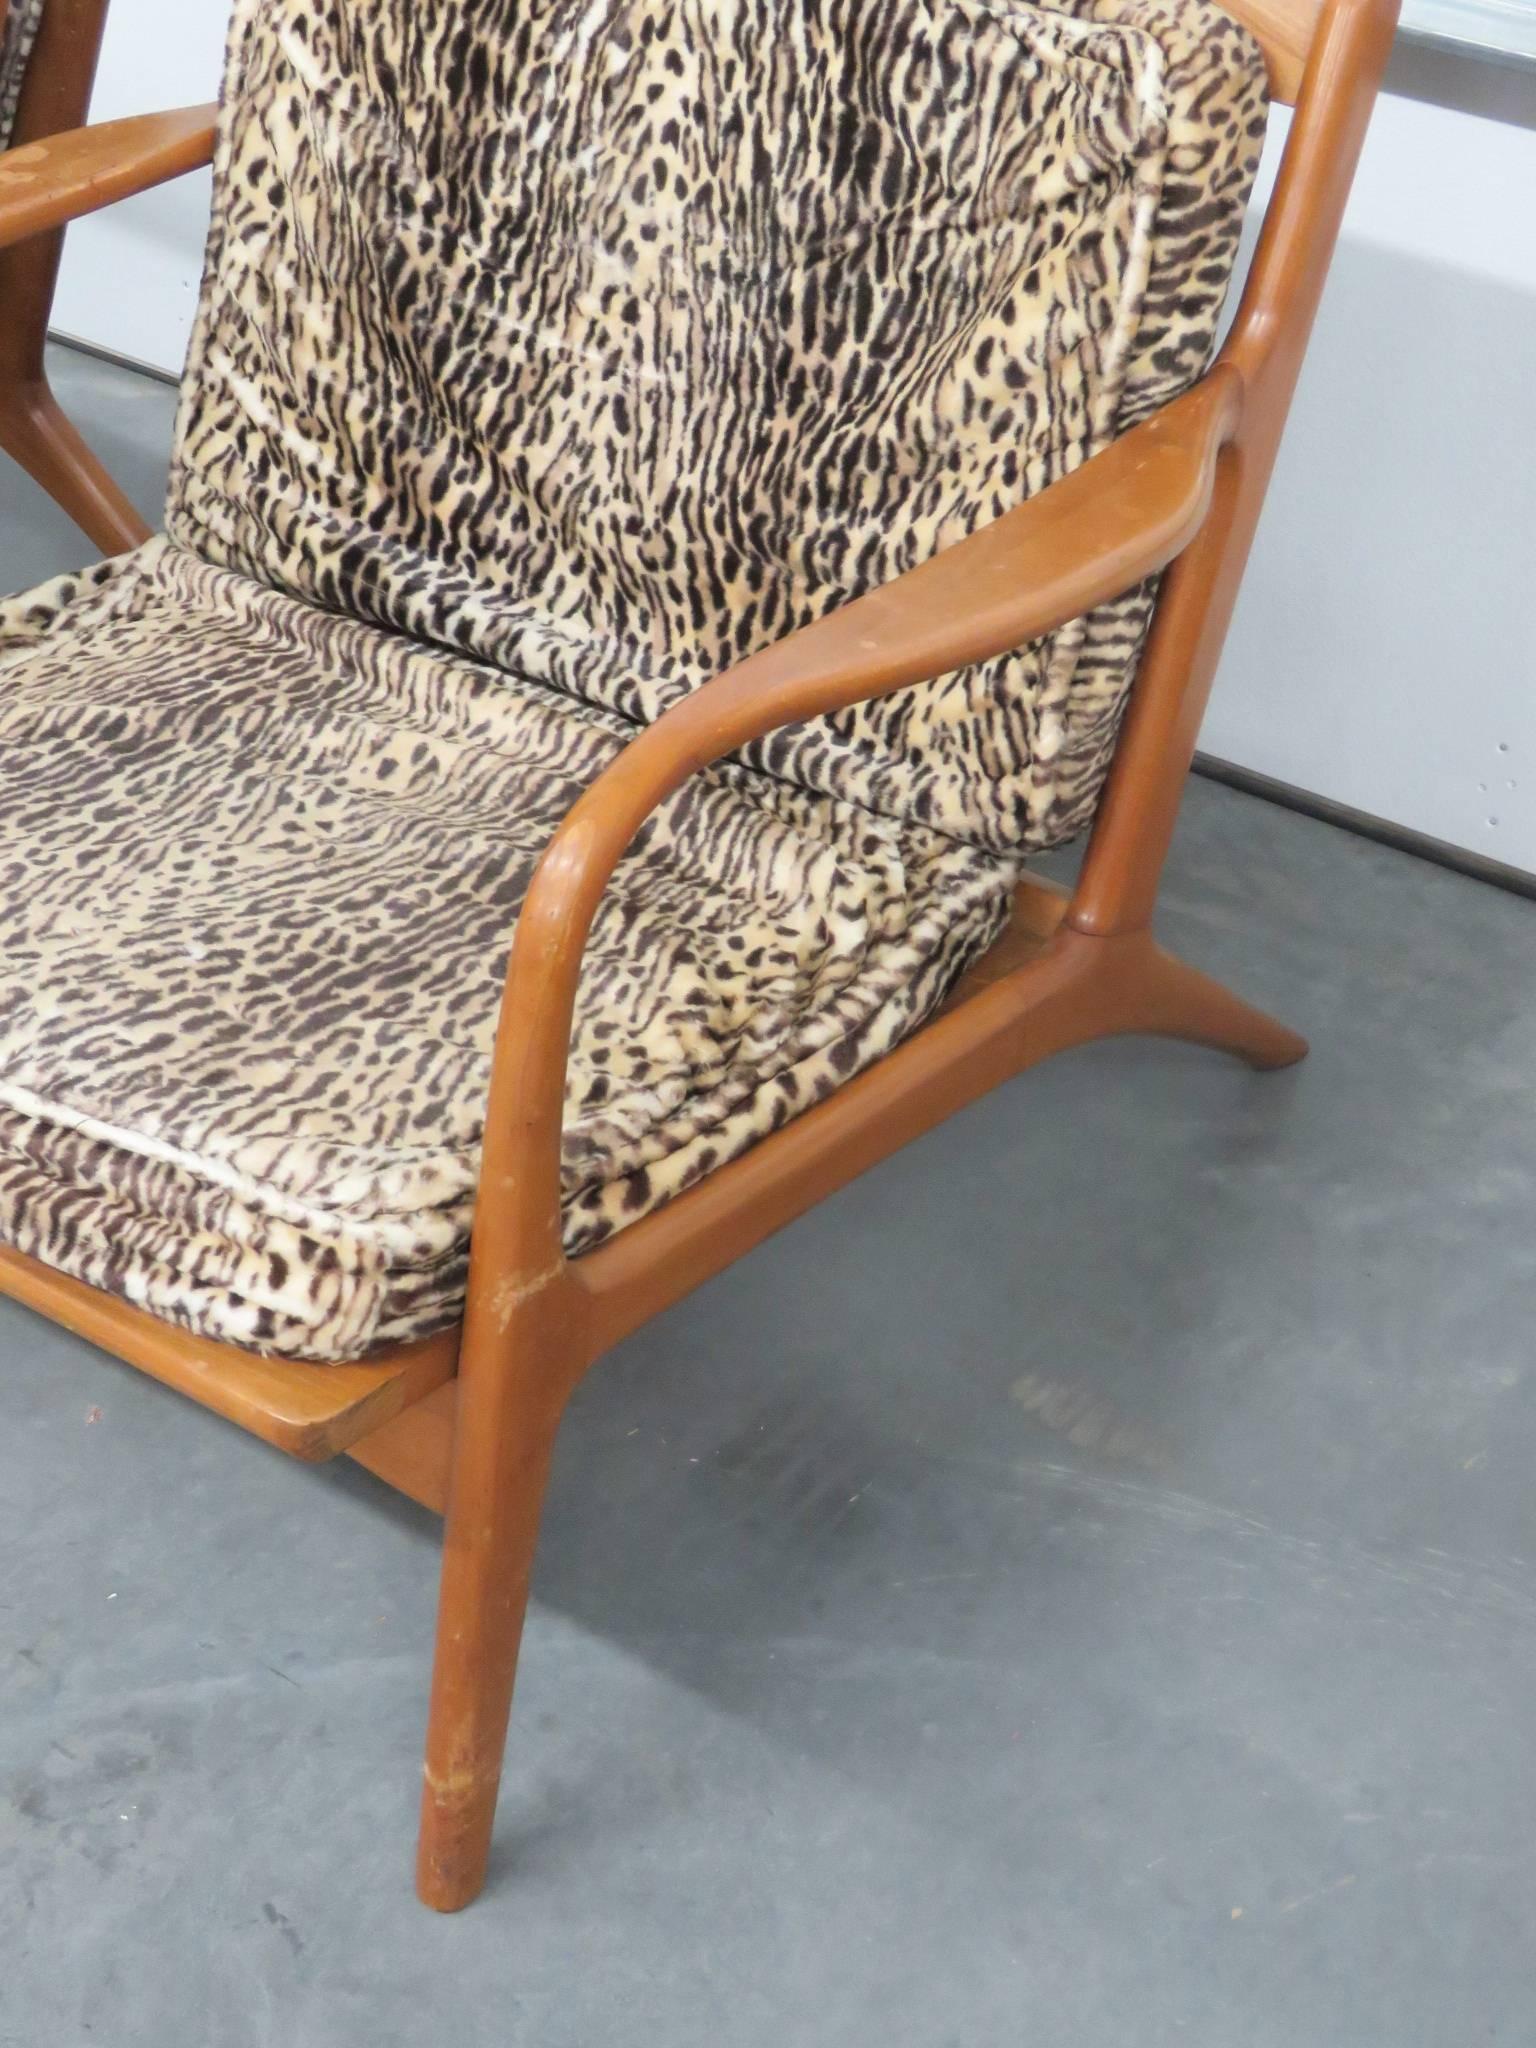 Teak frame with spindle backs. Leopard cushions.